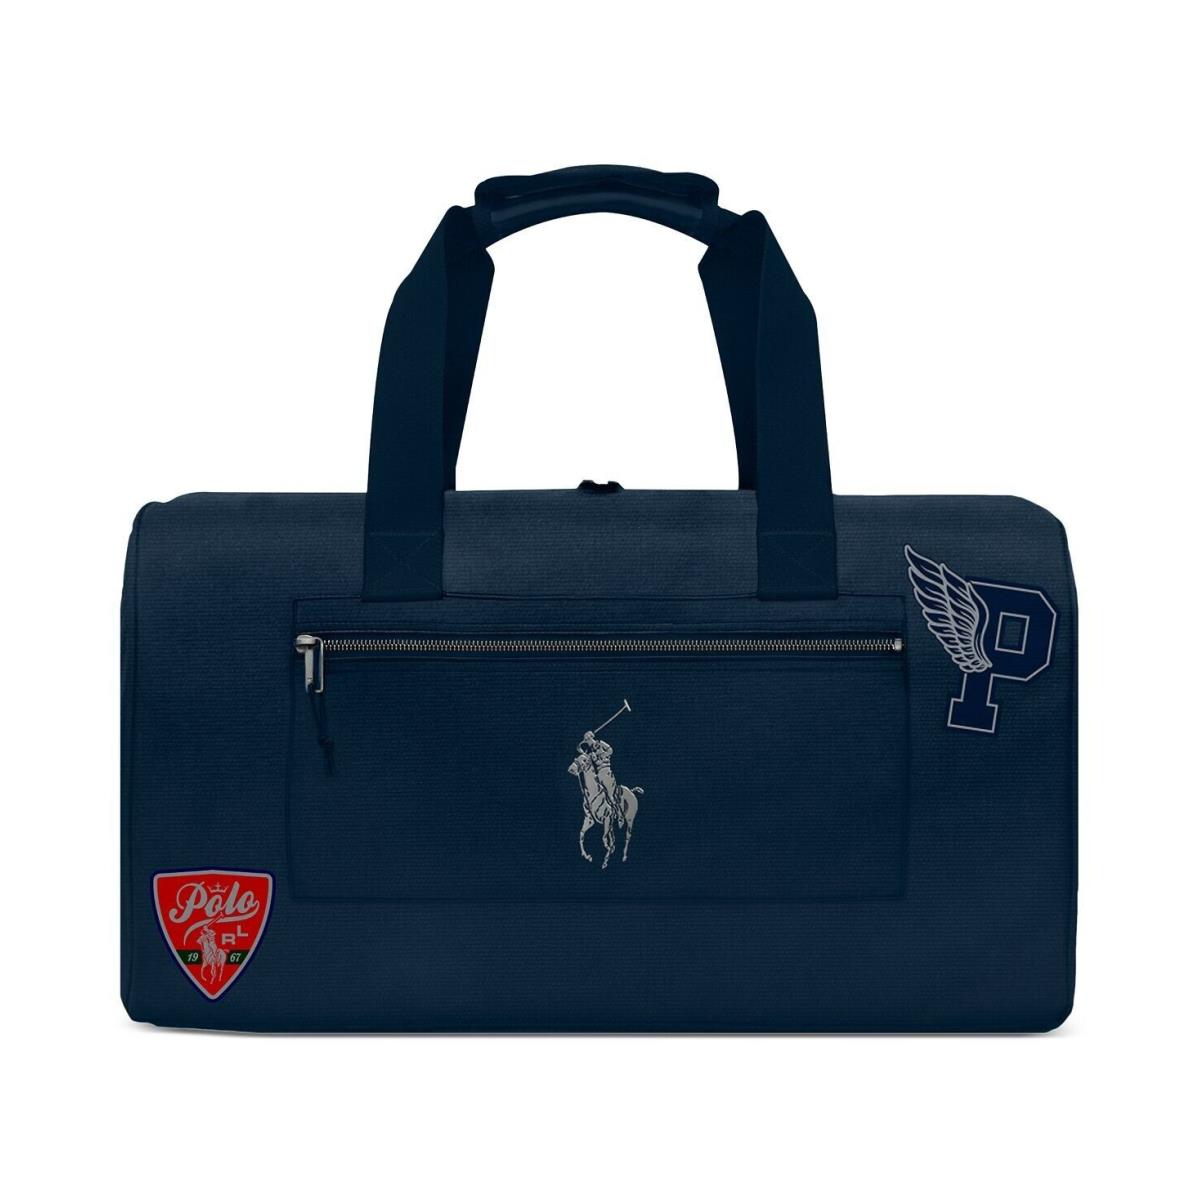 Ralph Lauren Polo Duffle Bag Gym Weekender Carryon Luggage Blue Logo Bag Ltd